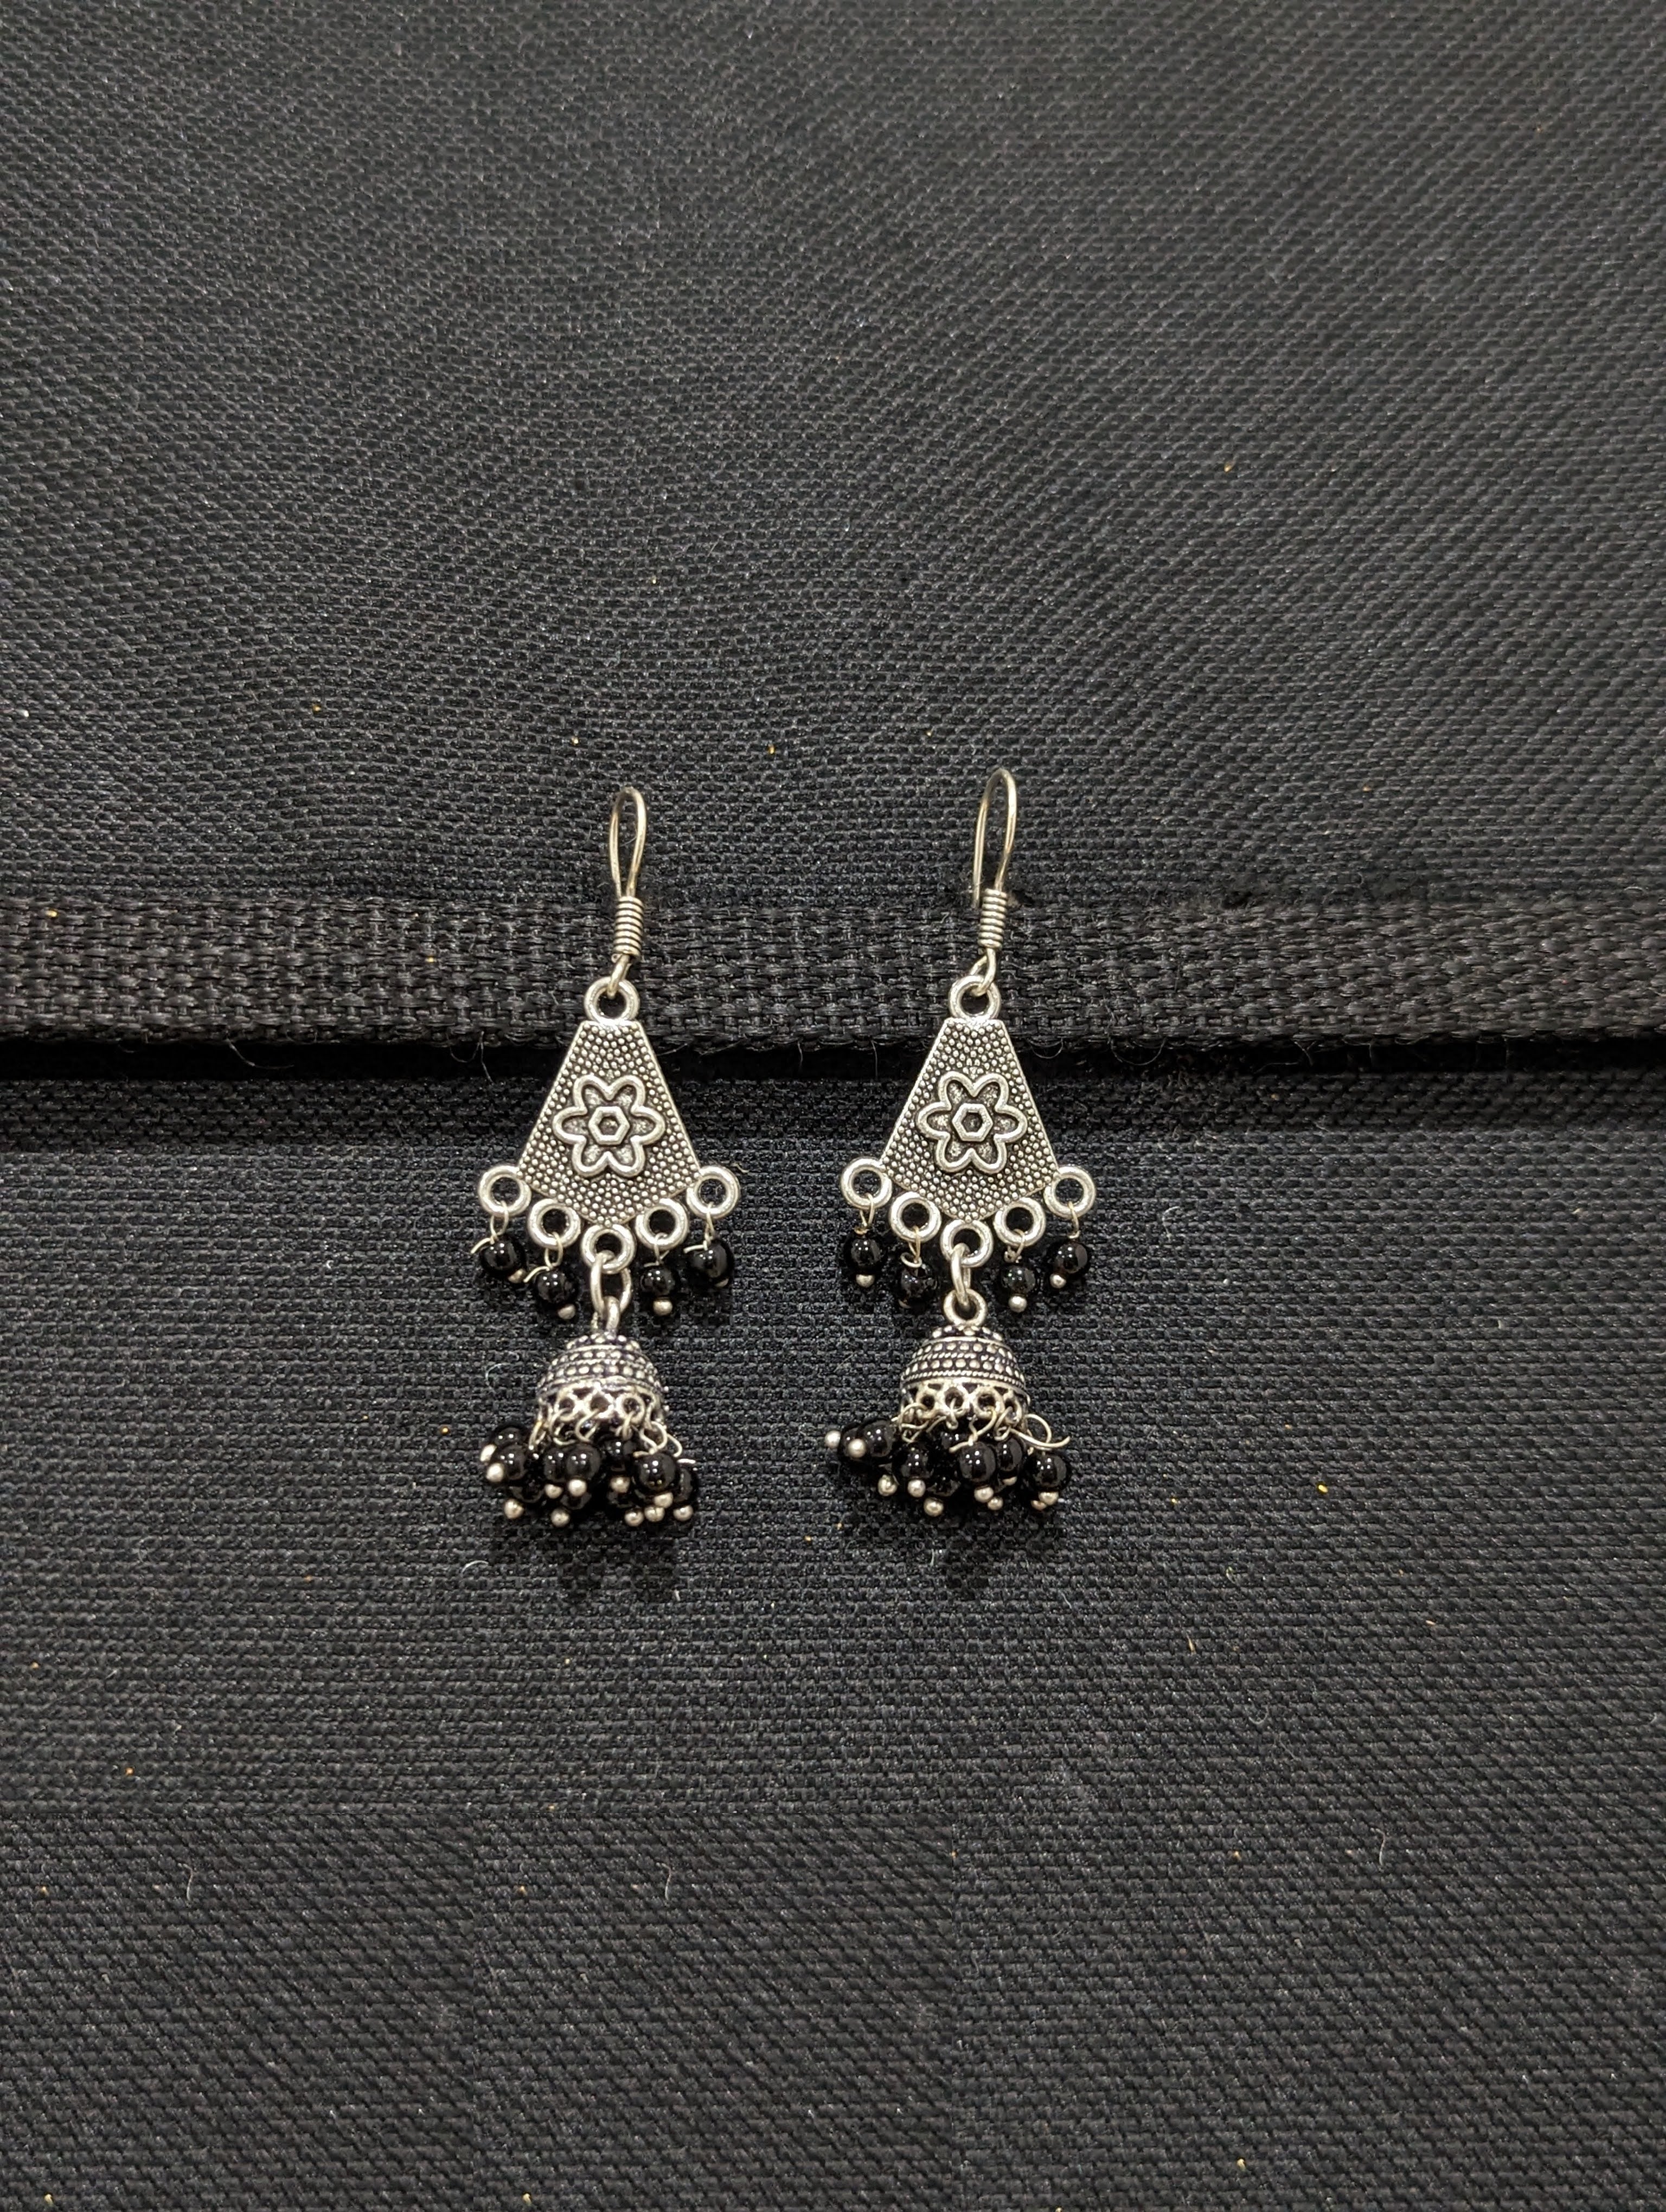 Oxidized Black polish small size jhumka Silver Plated Ghungroo Earrings  women | eBay